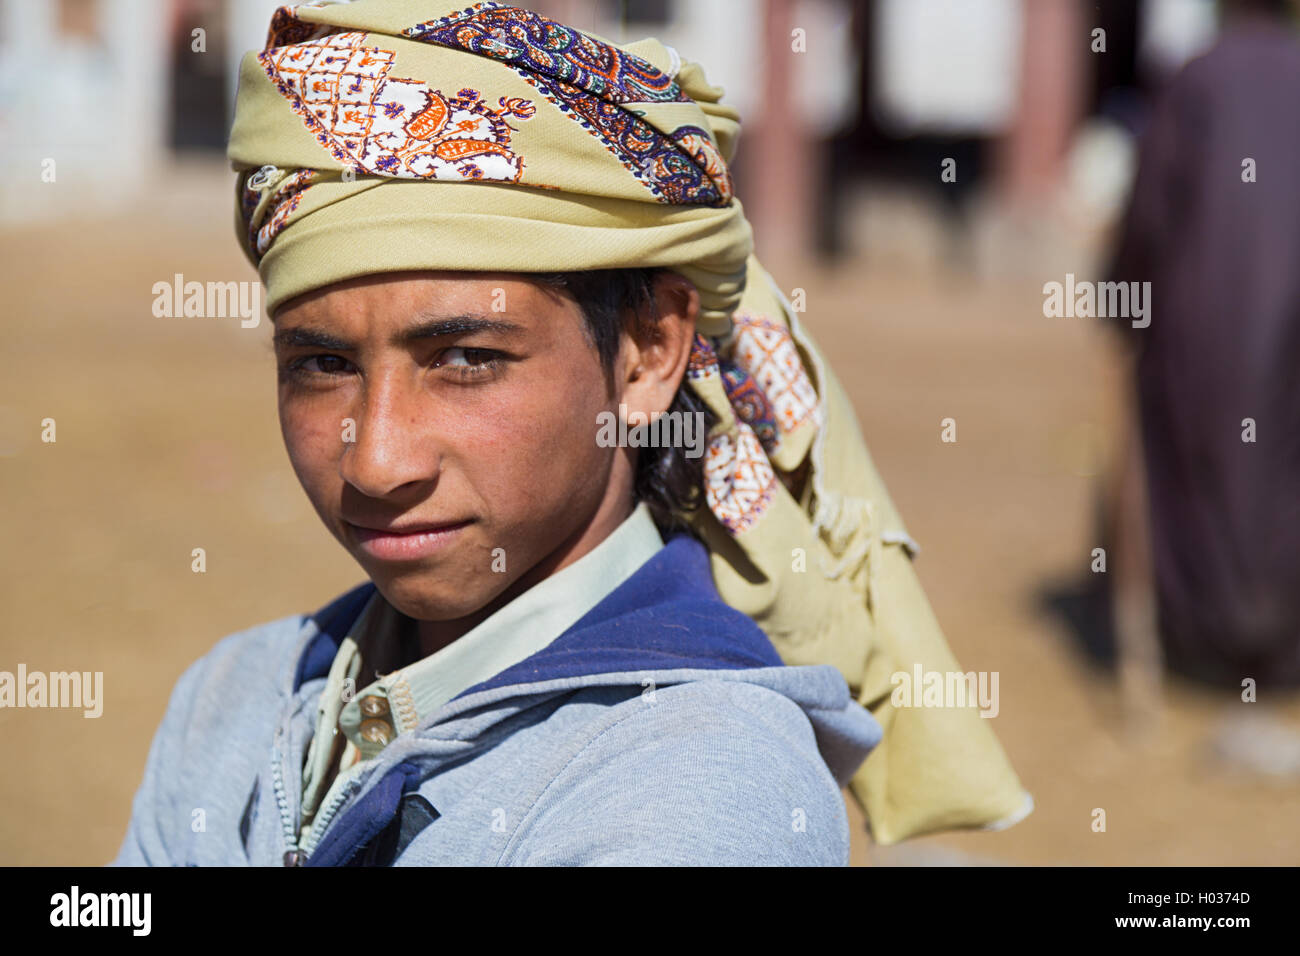 DARAW, EGYPT - FEBRUARY 6, 2016: Portrait of local boy with head scarf. Stock Photo